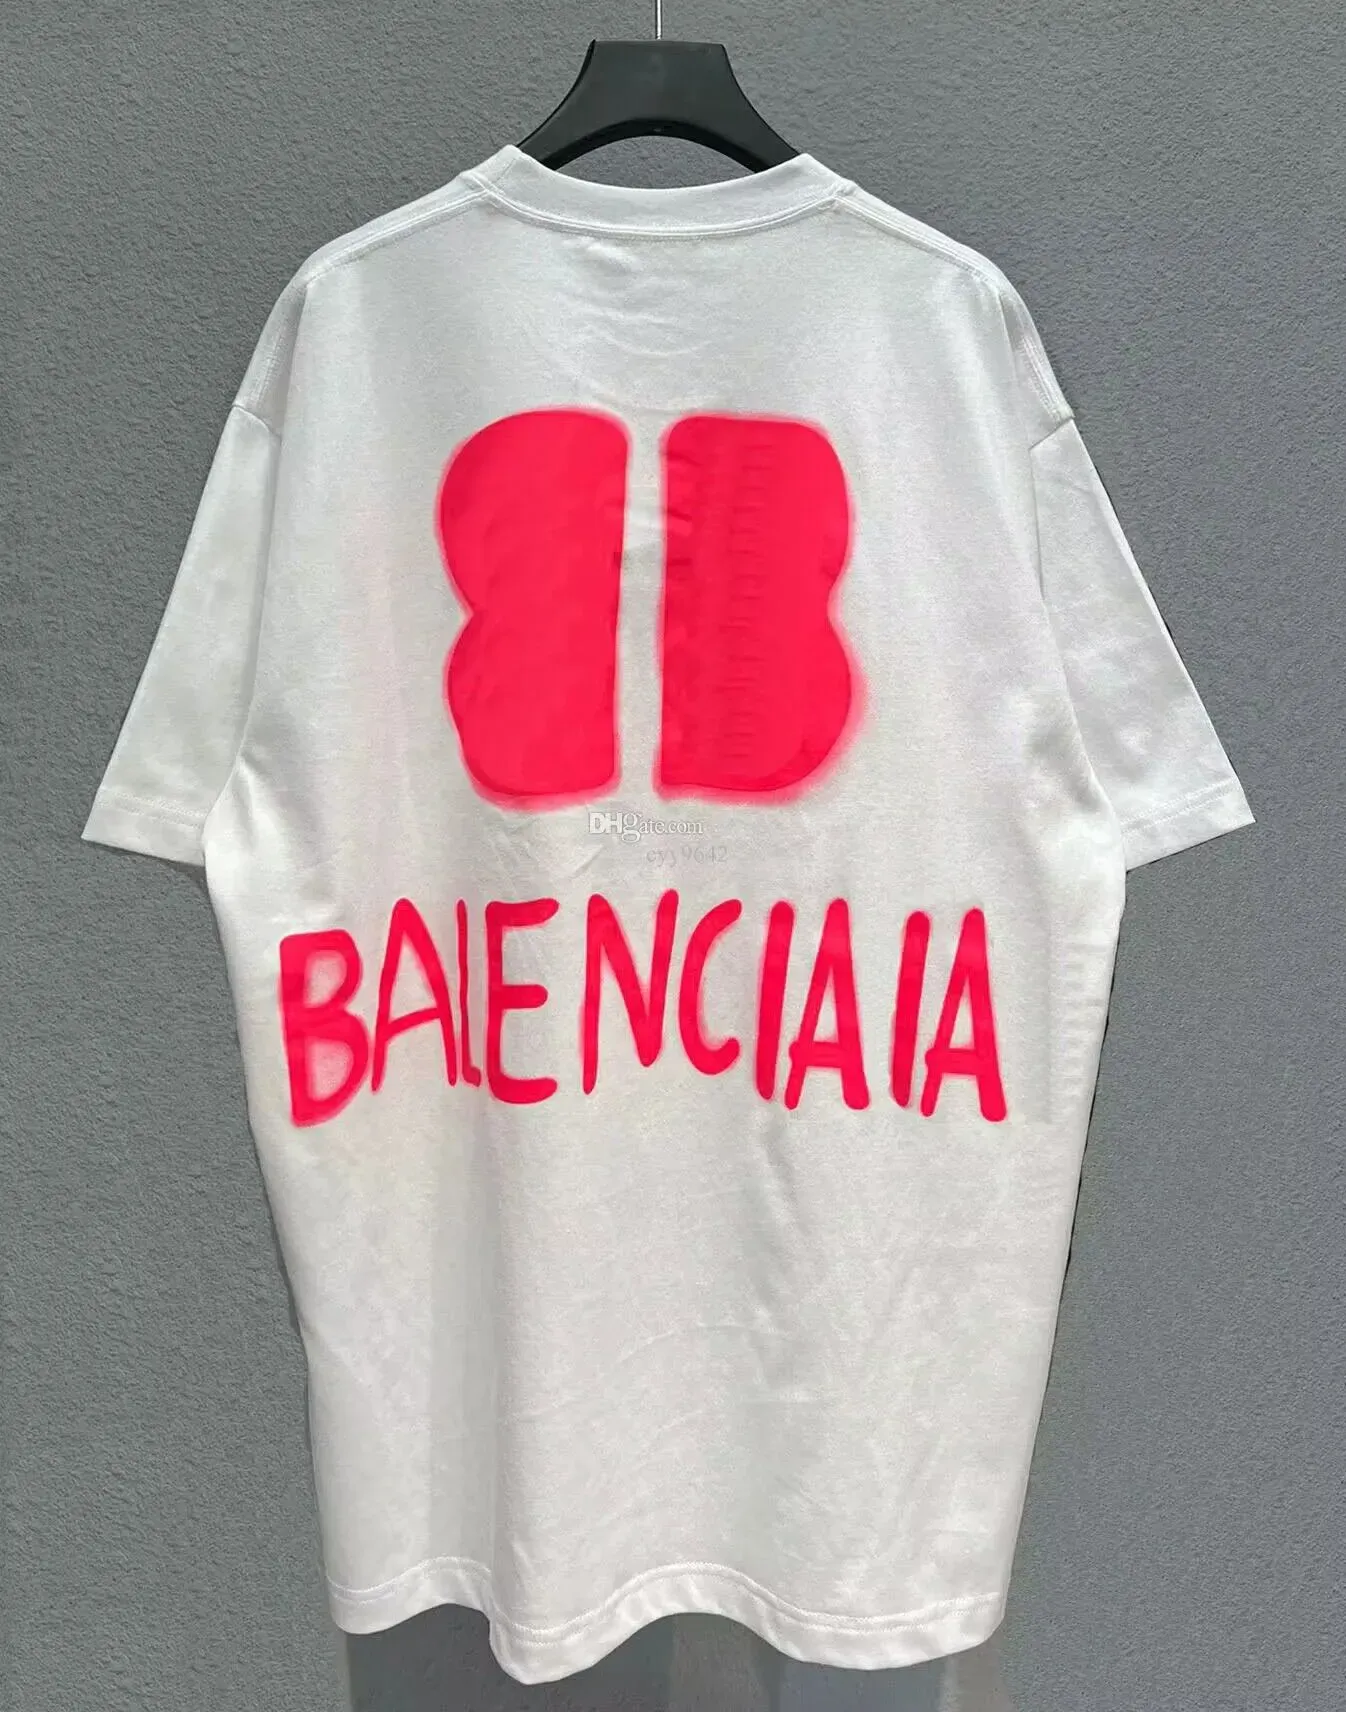 Balengiaga Shirt heren Plus Size Hoodies T-shirt Dames Men'sece Top Capuchon Casual Fles Kleding Unisex Hoodies Jas 8347